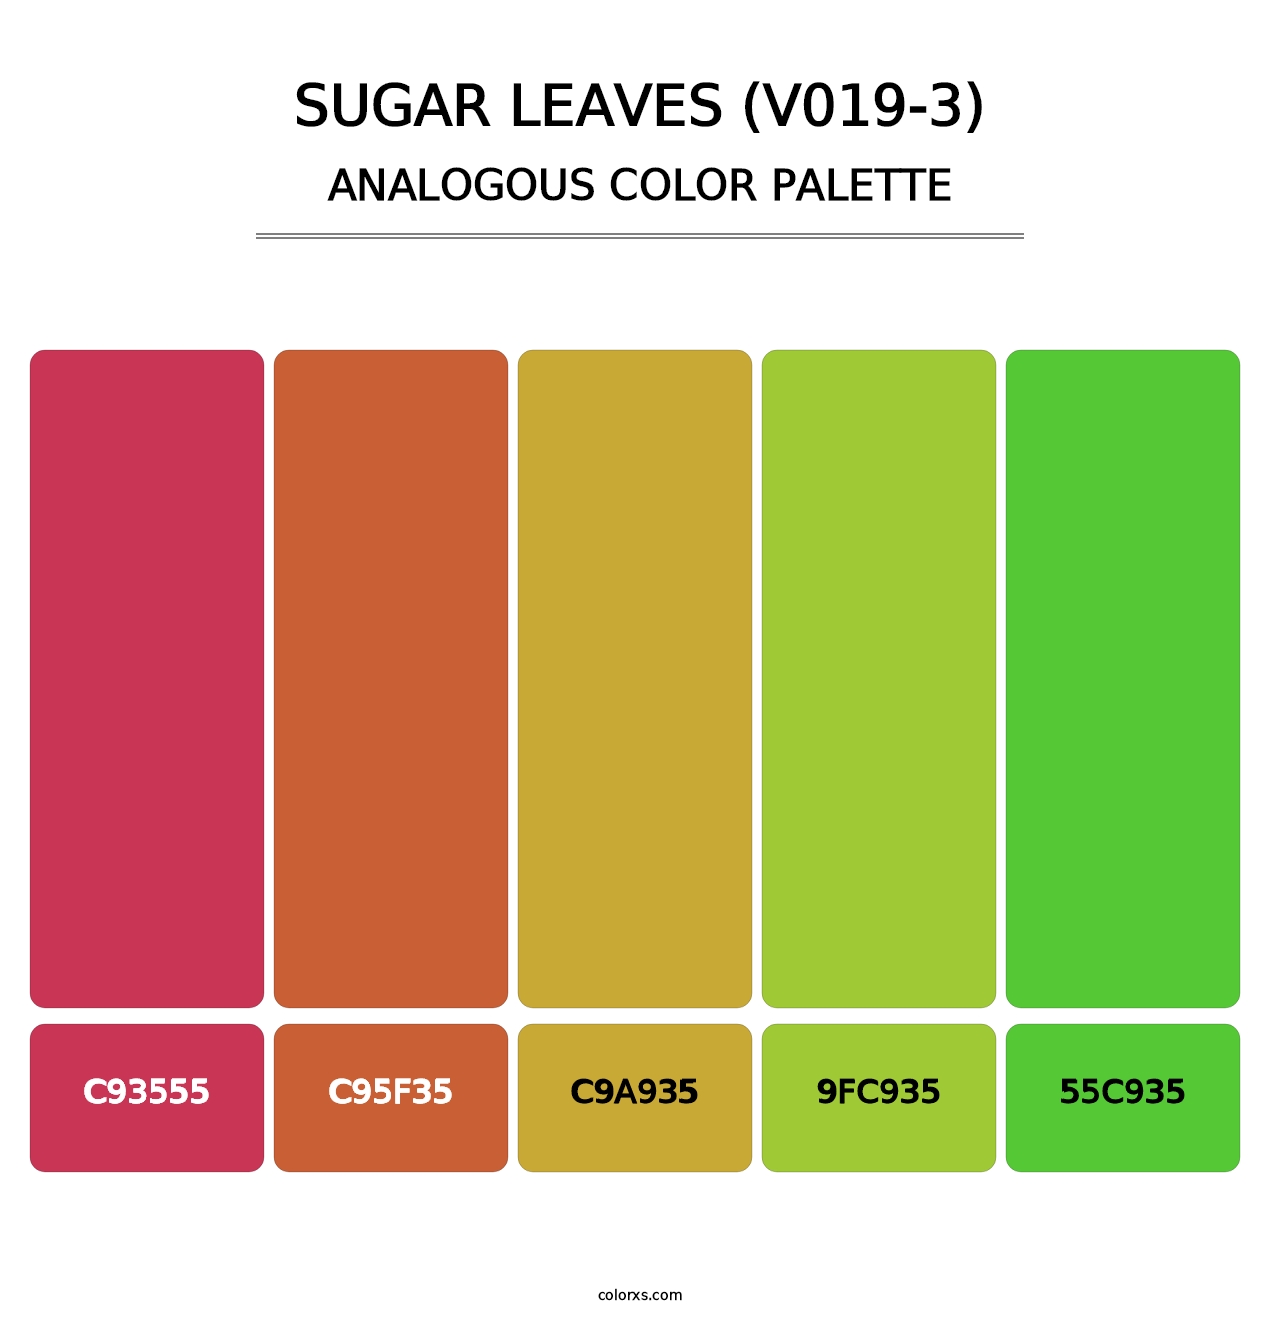 Sugar Leaves (V019-3) - Analogous Color Palette